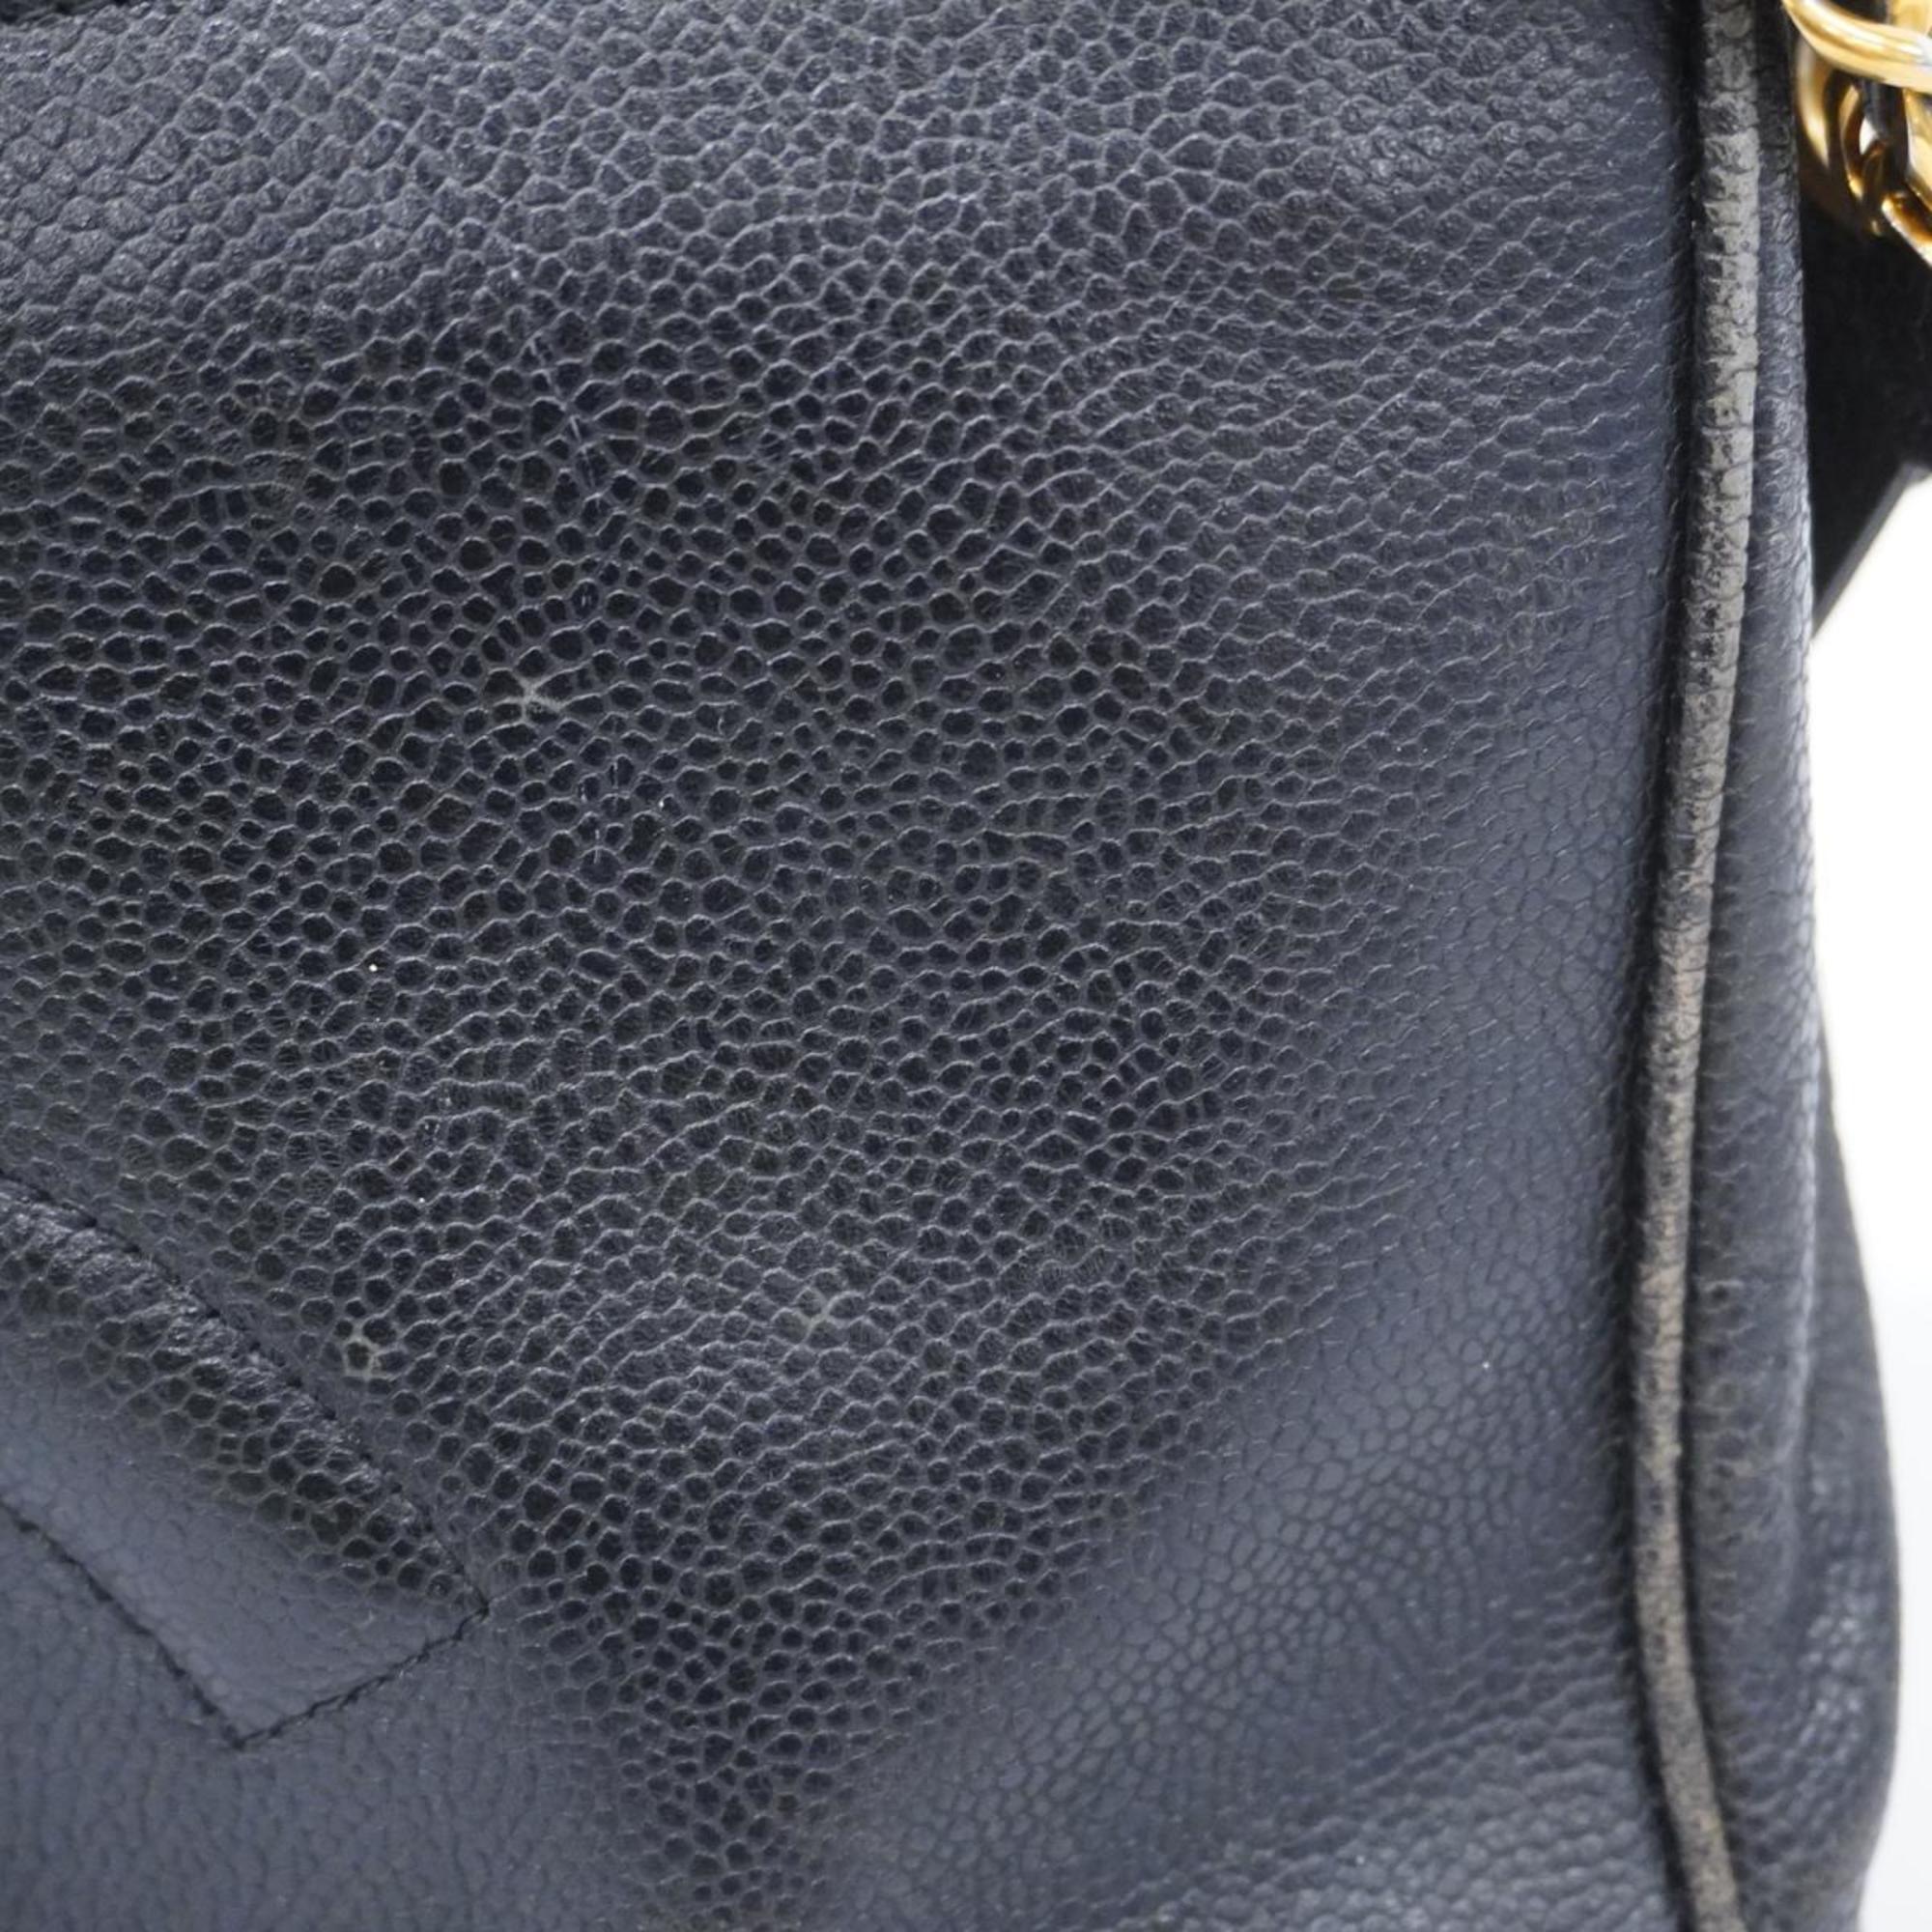 Chanel Shoulder Bag Chain Caviar Skin Black Women's